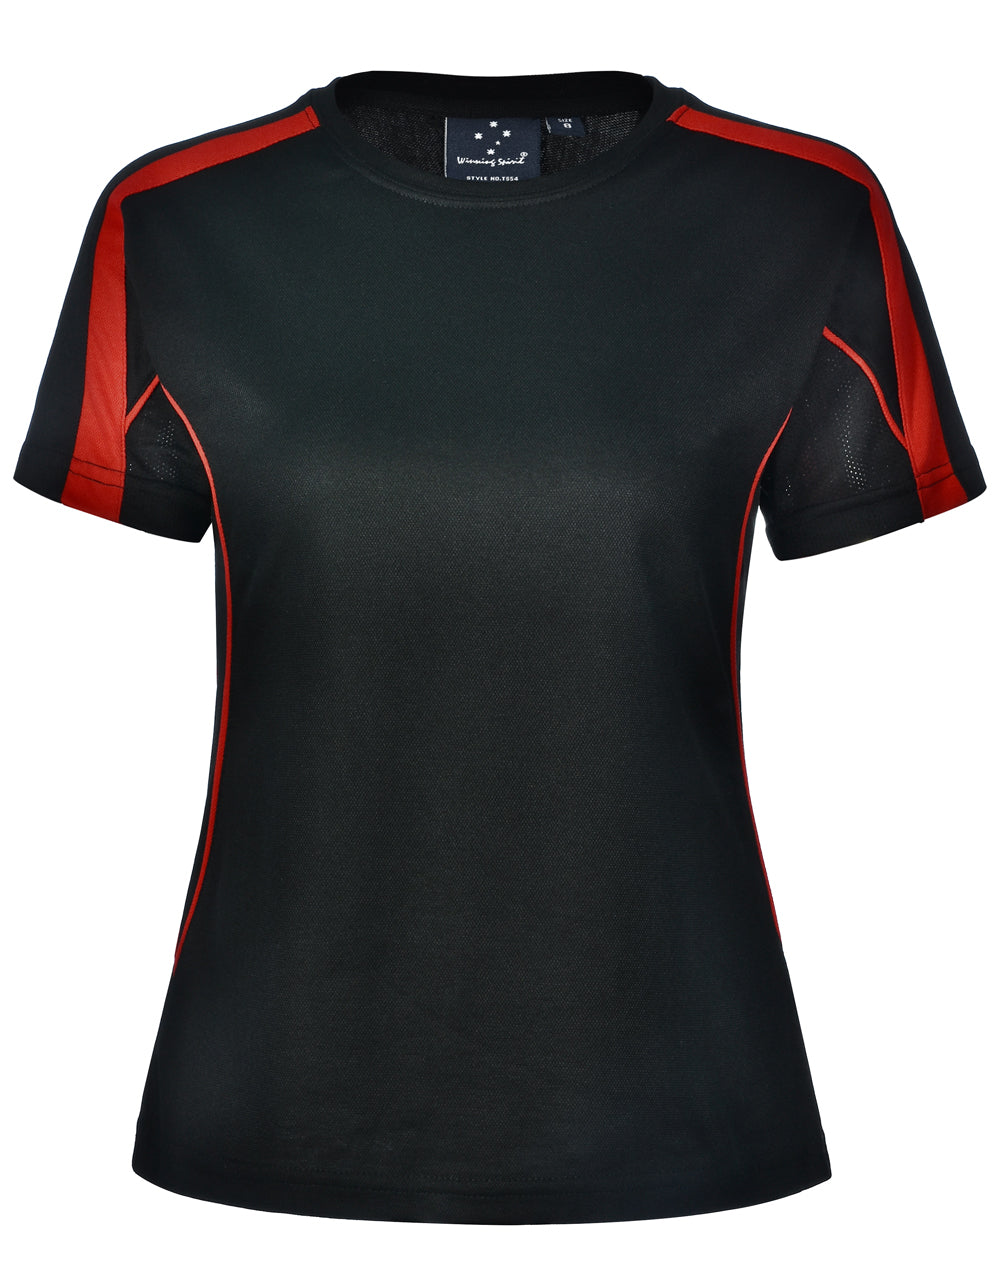 Winning Spirit Ladies' Truedry Short Sleeve Fashion Tee Shirt (TS54)